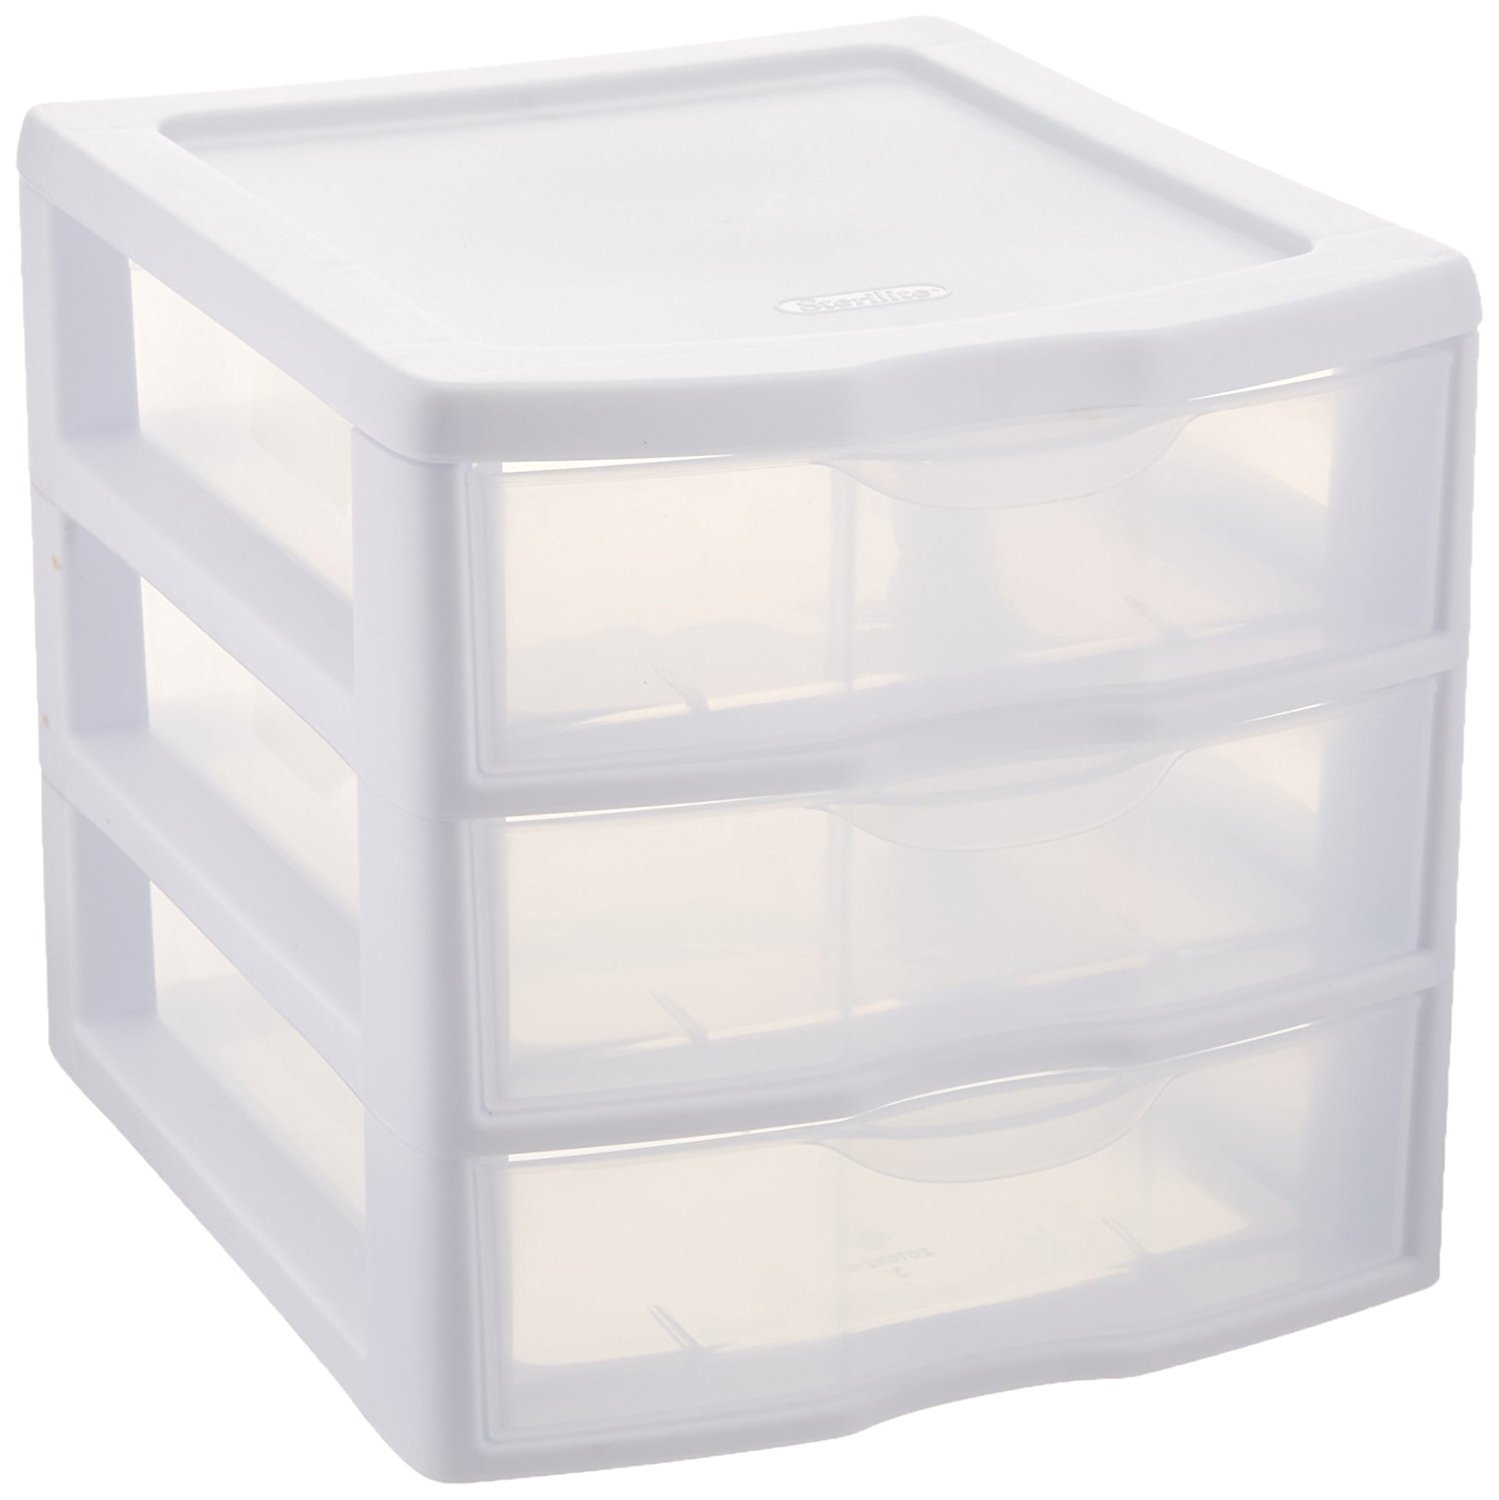 plastic storage drawers amazon.com: sterilite clearview 3 storage drawer organizer: home u0026 kitchen NNUHMFF